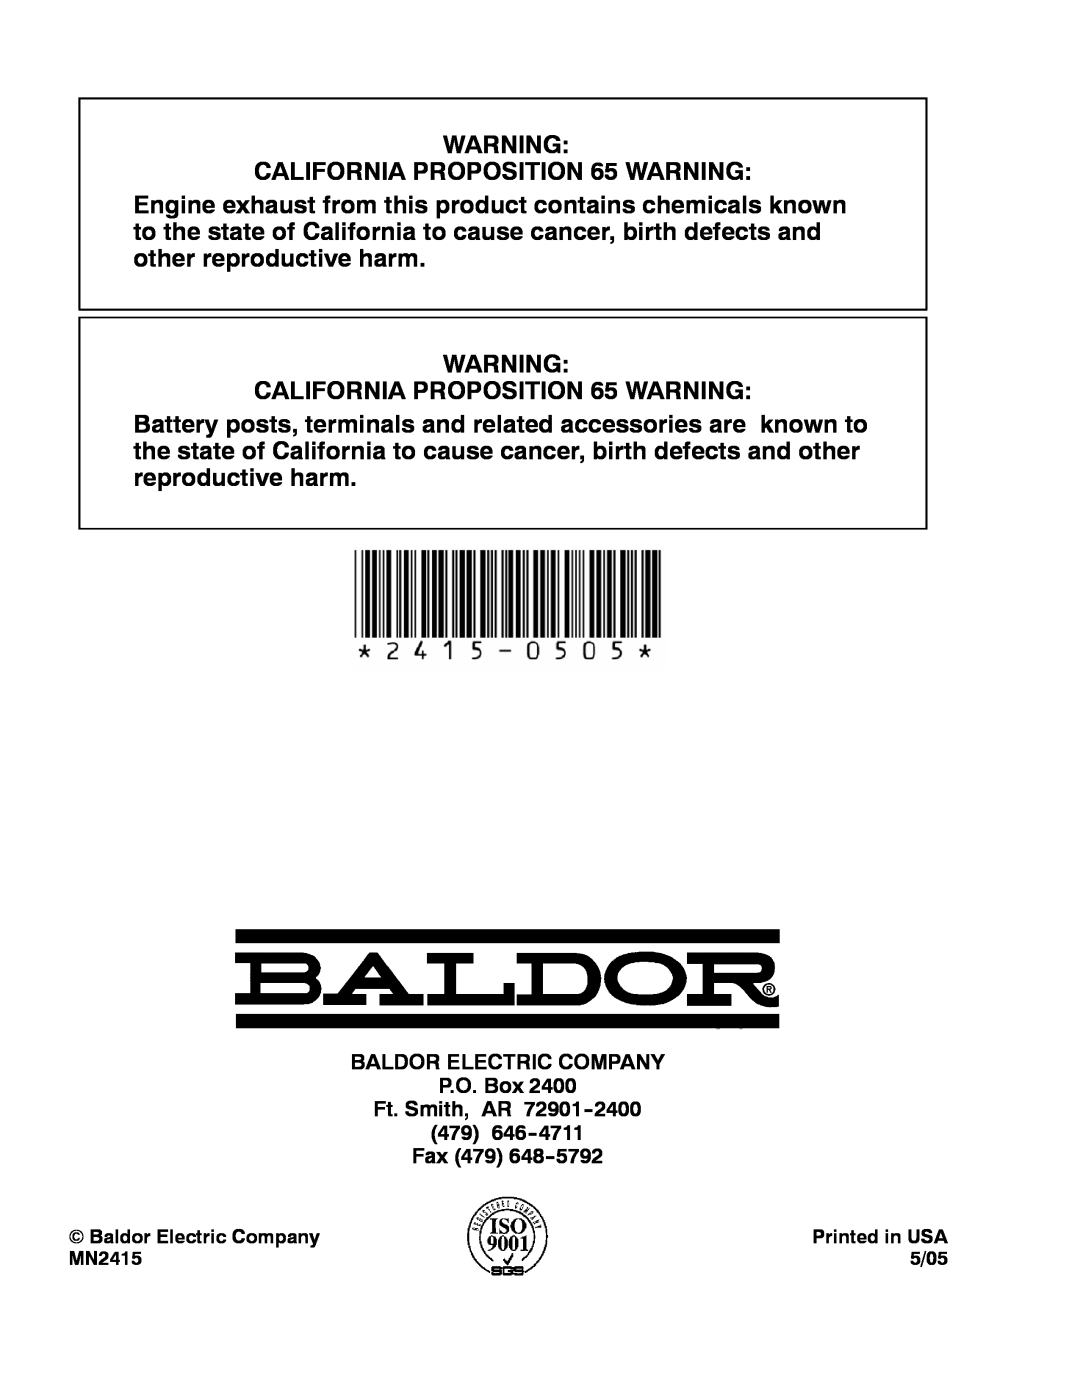 Baldor AE25, AE11, AE10 BALDOR ELECTRIC COMPANY P.O. Box Ft. Smith, AR 479 Fax 479, Baldor Electric Company, MN2415, 5/05 